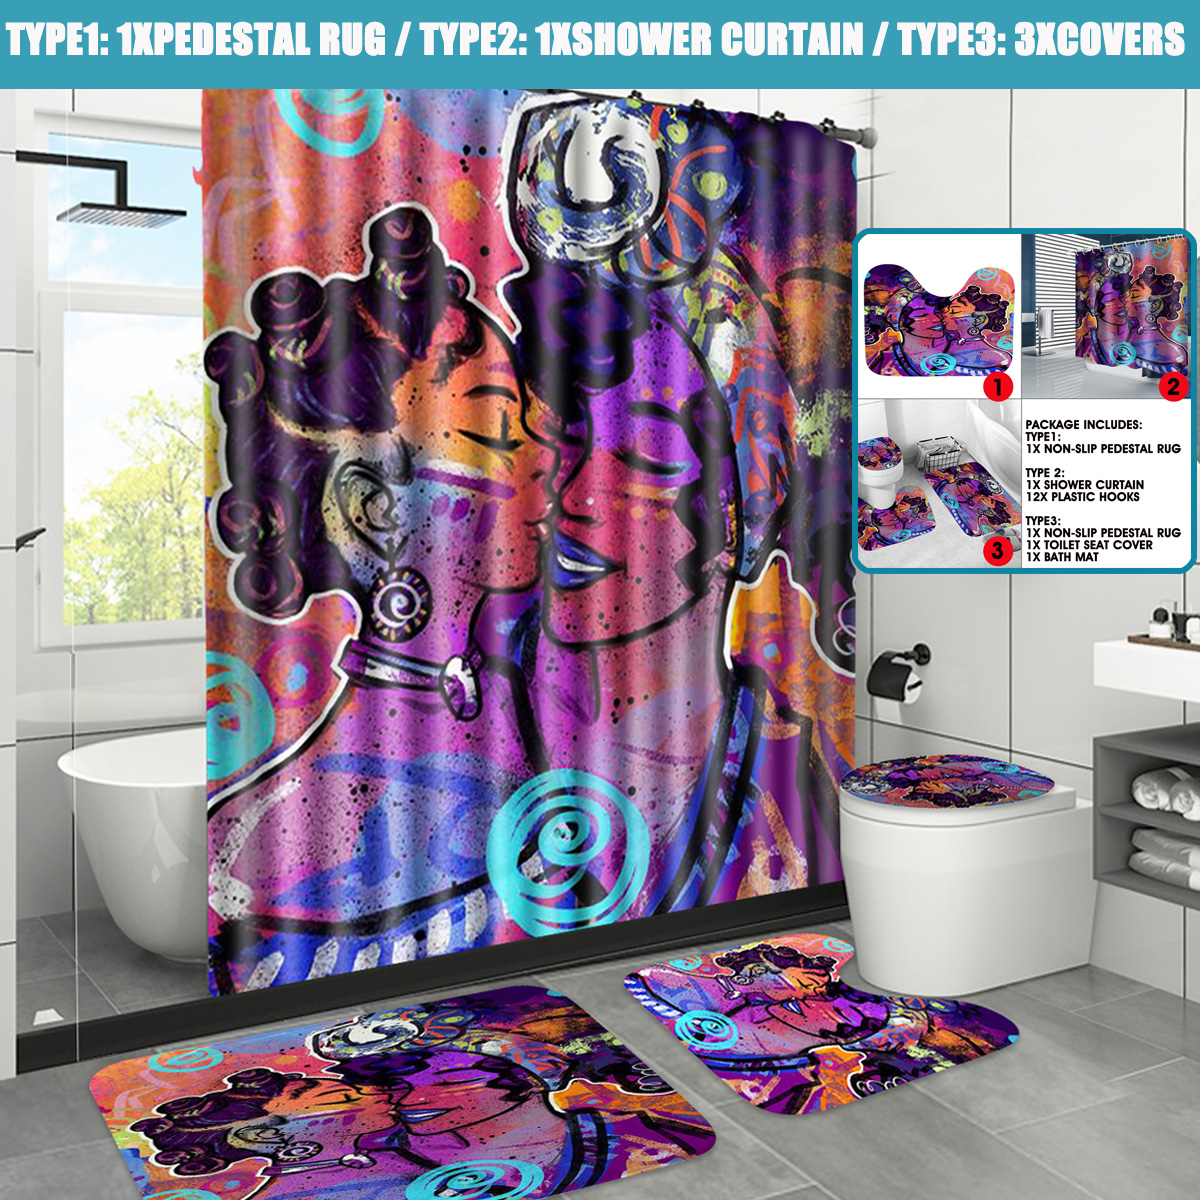 Bathroom-Shower-Curtain-Bath-Mat-Toilet-Cover-Rug-Decor-Set-Non-Slip-Waterproof-1814610-1